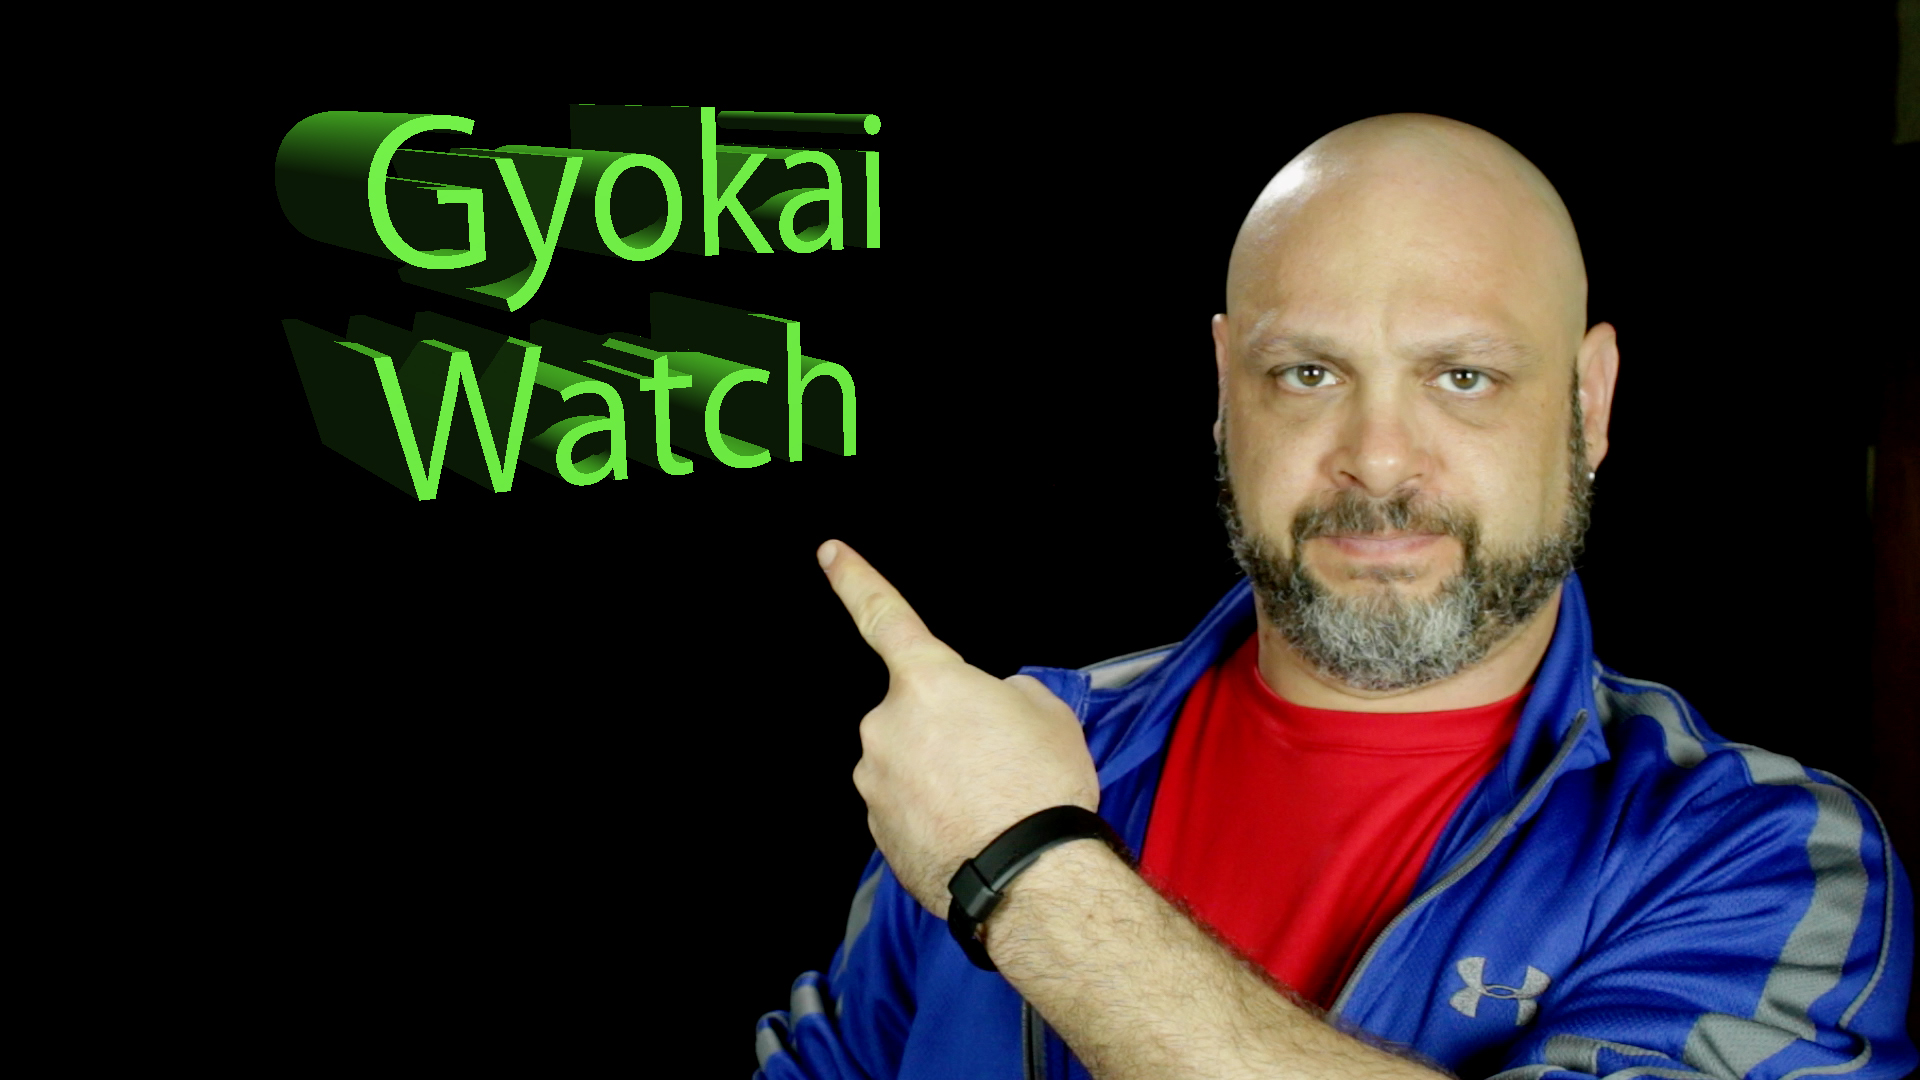 Gyokai Watch